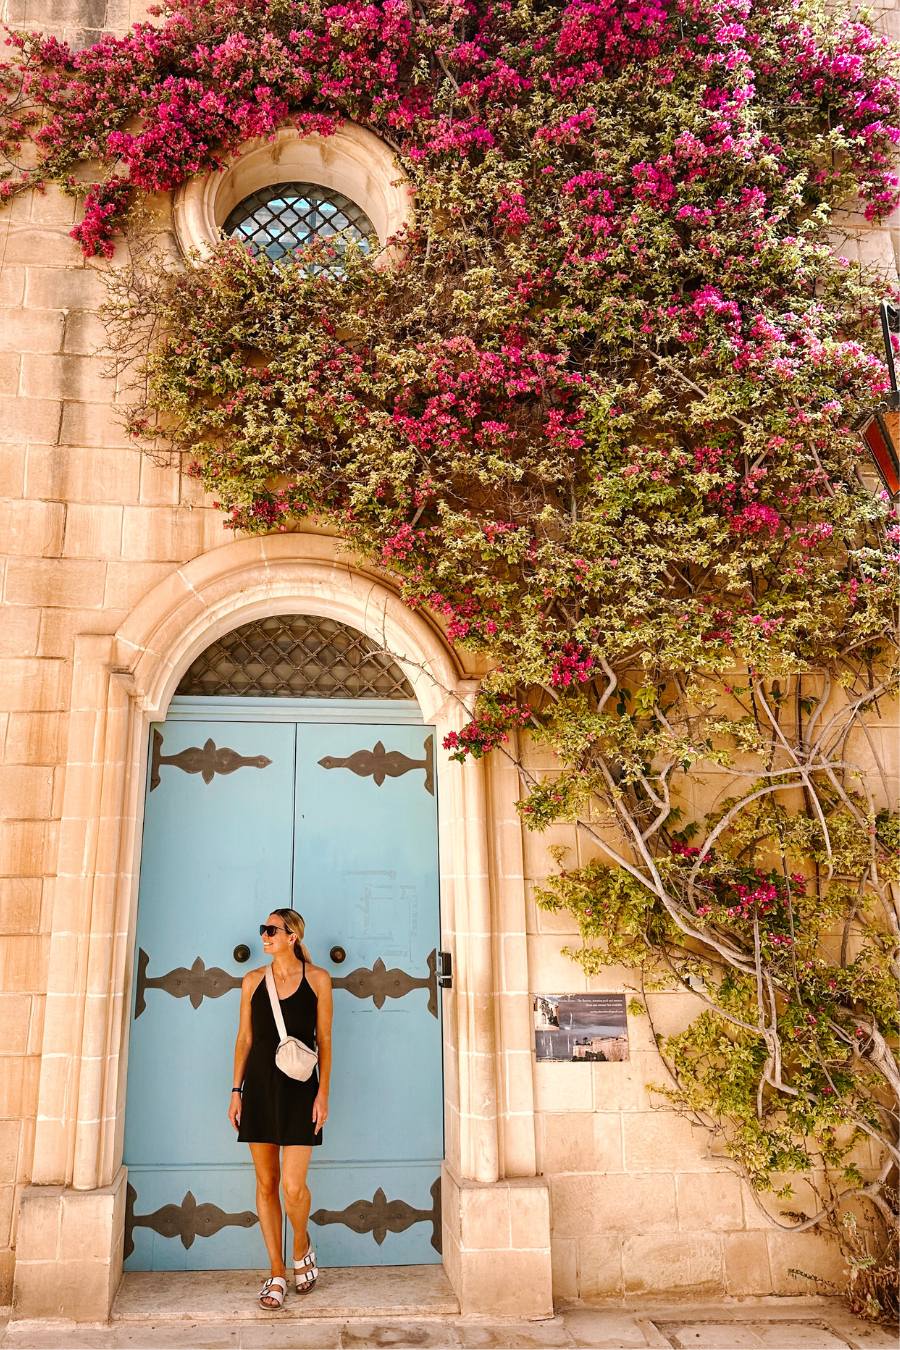 Mdina Malta 5 day itinerary